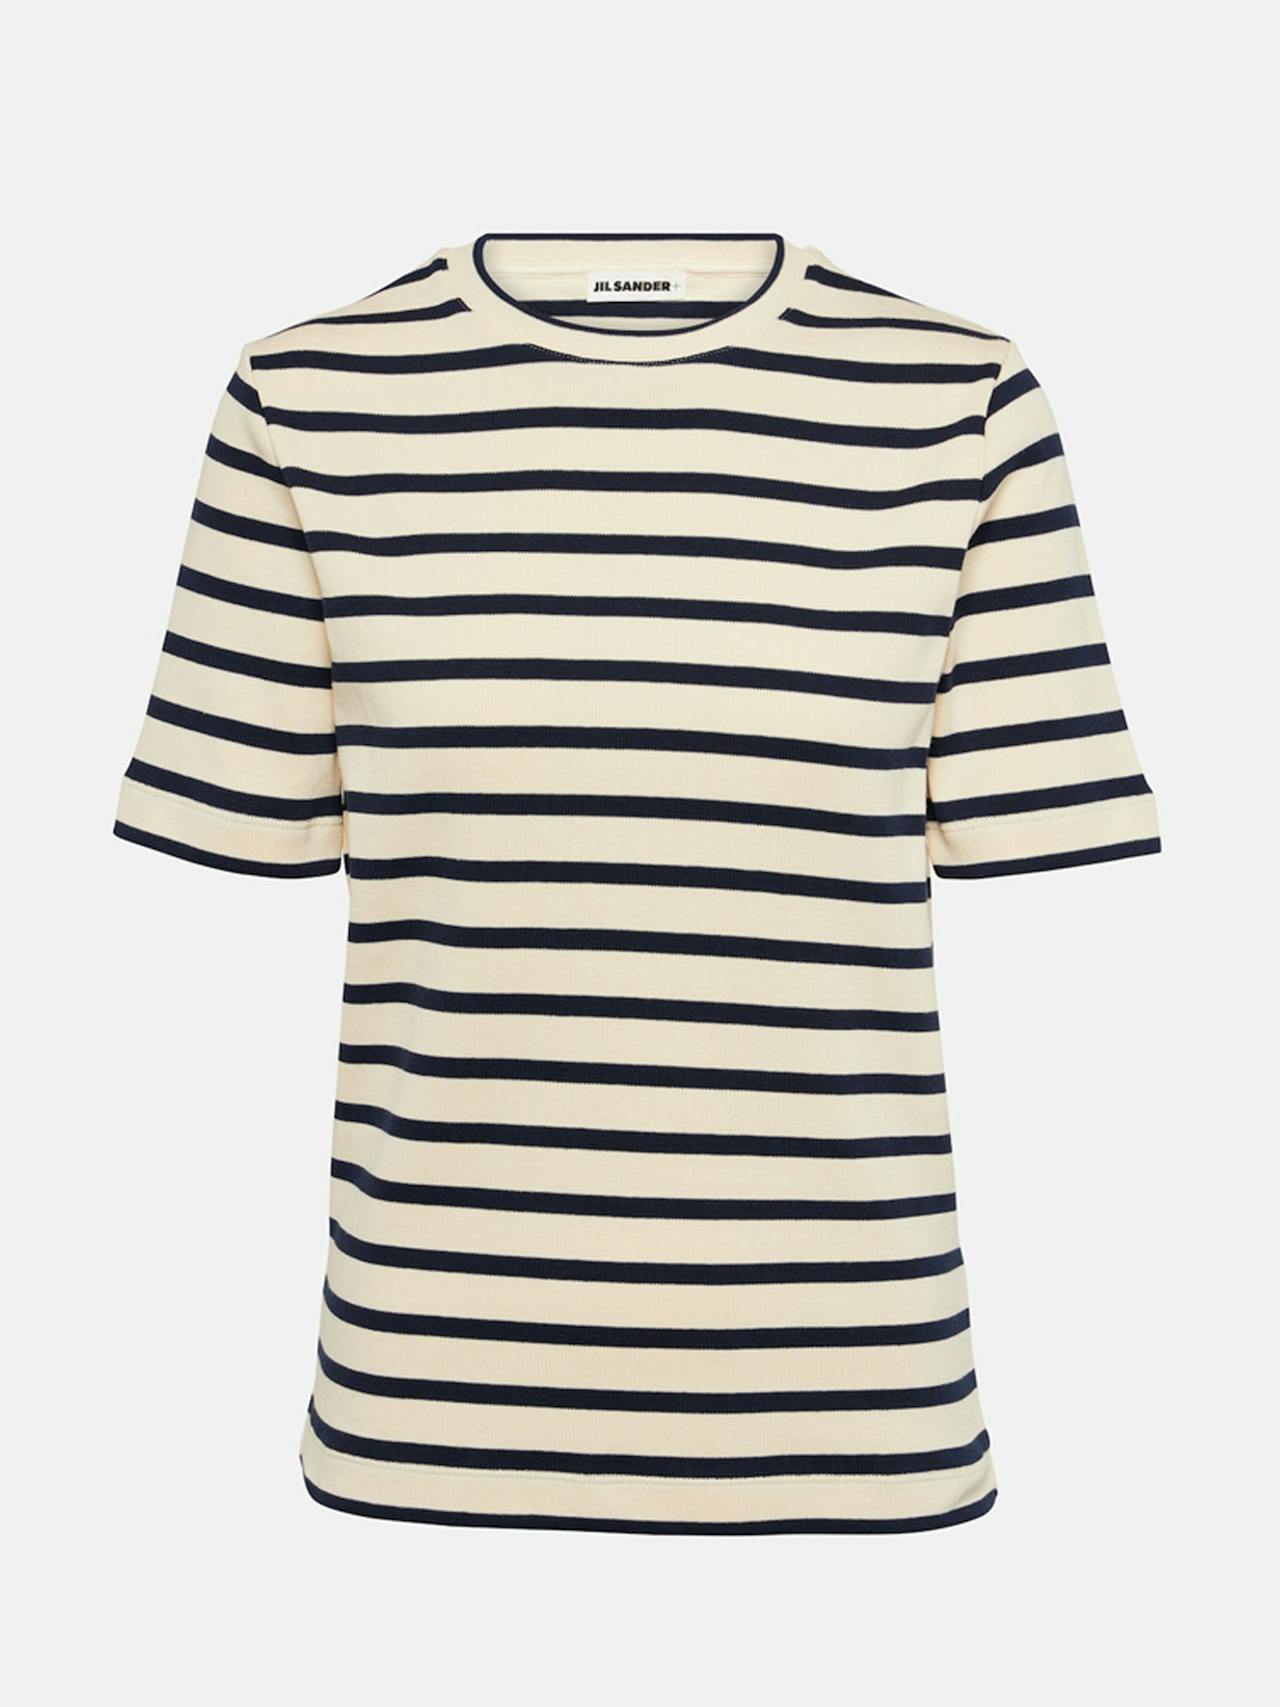 Striped cotton jersey t-shirt